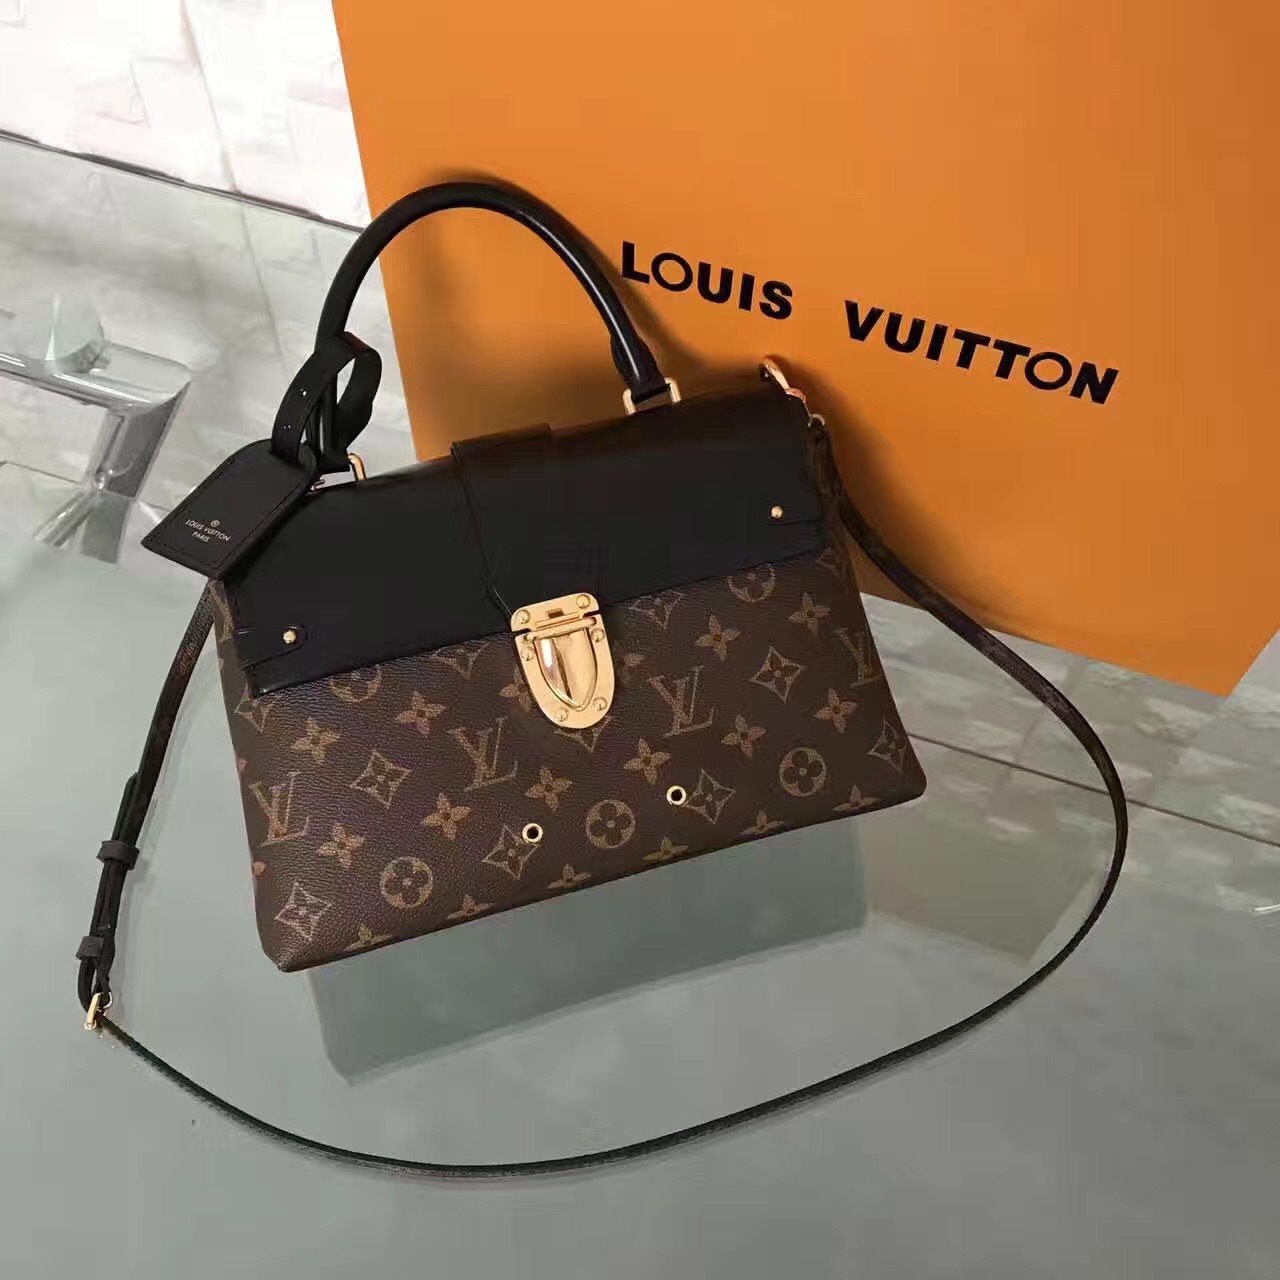 LV Louis Vuitton monogram shoulder handbags